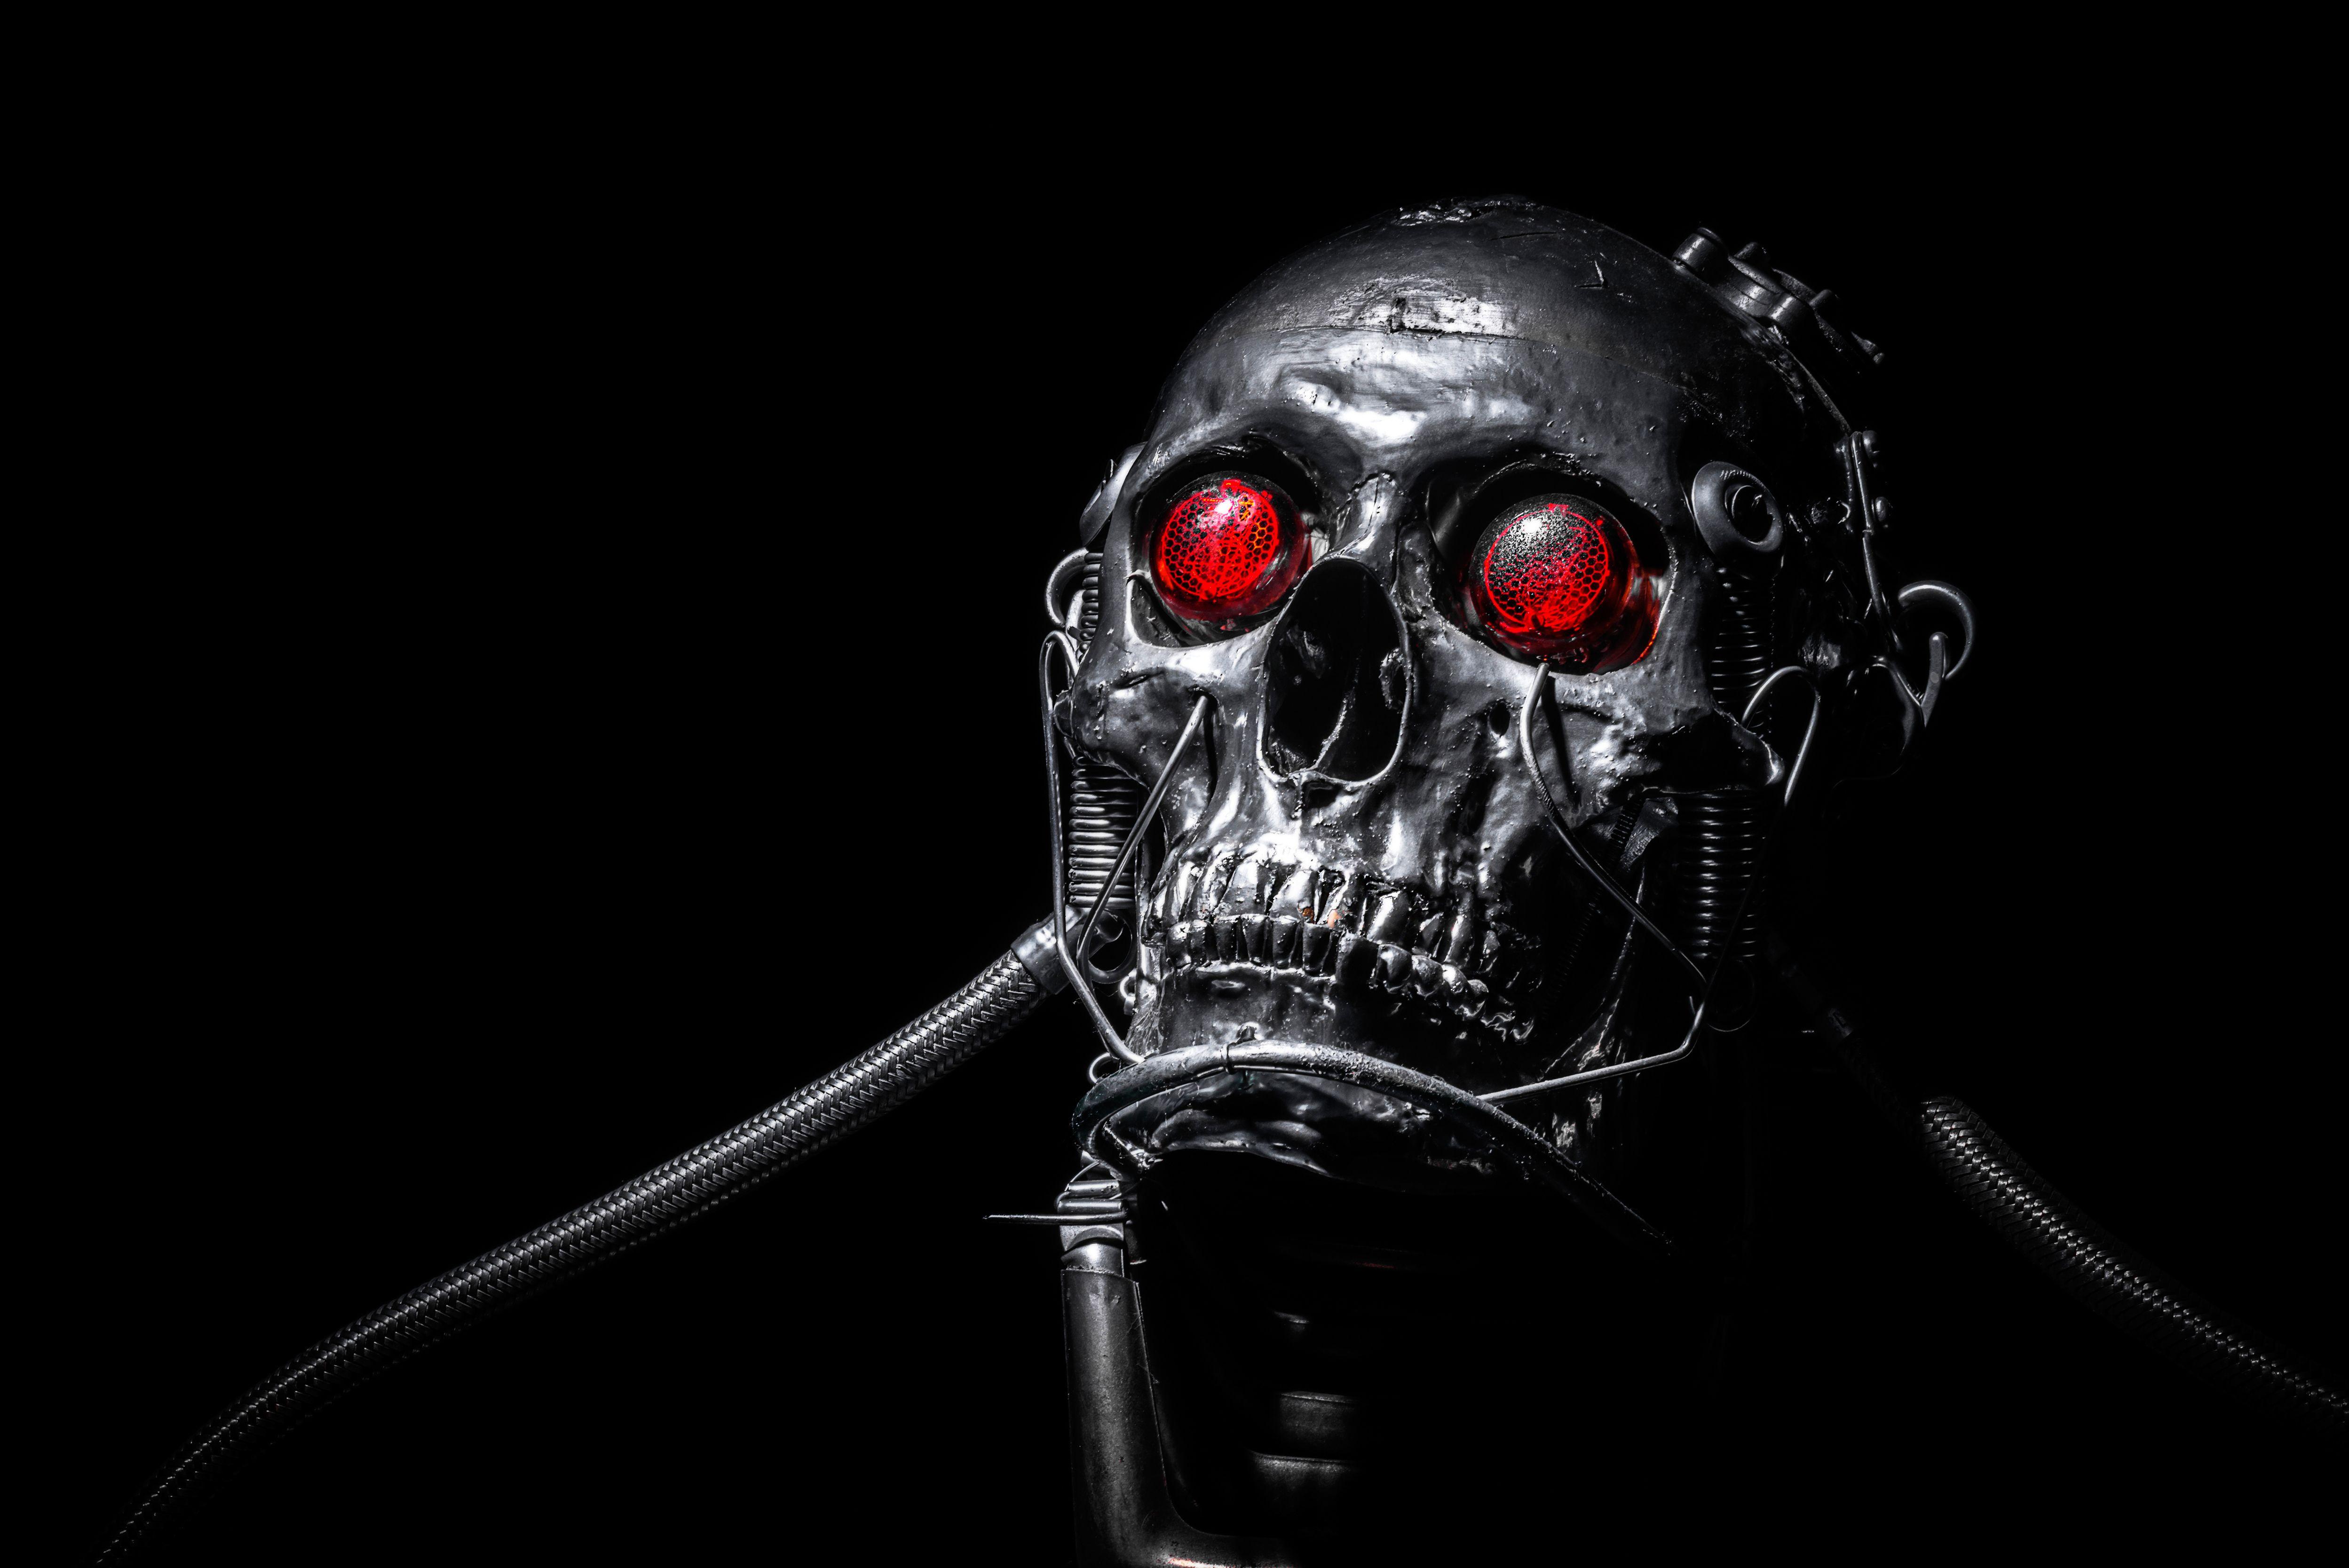 Red-Eyed Robot Logo - Robot skull with red eyes - Northrop Grumman